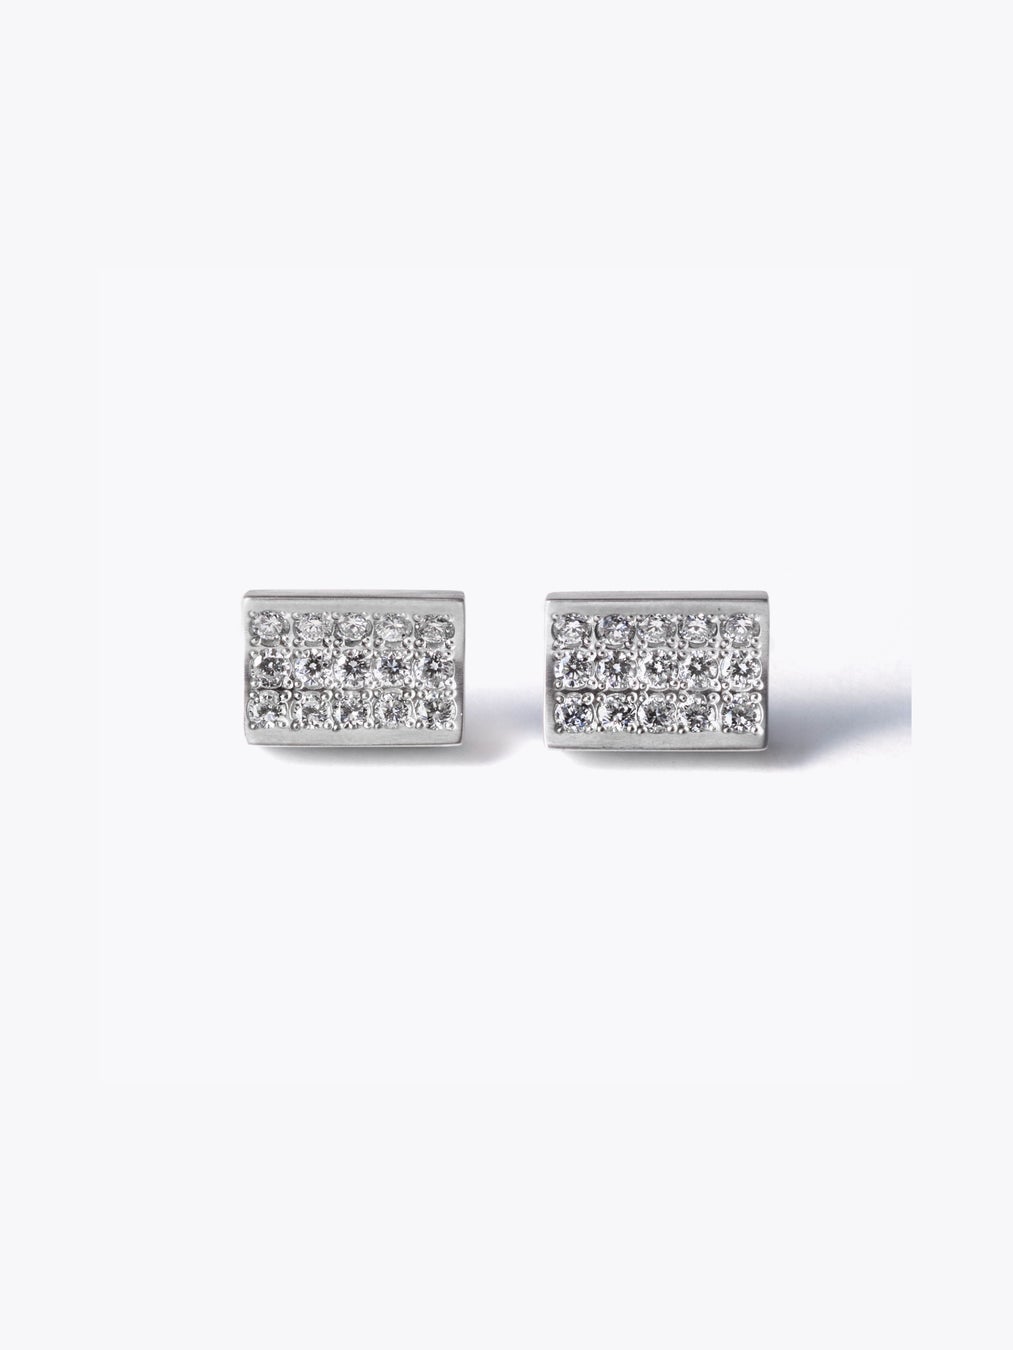 Reshine scratch earring 30 labgrowndiamonds (pair)　¥159,500